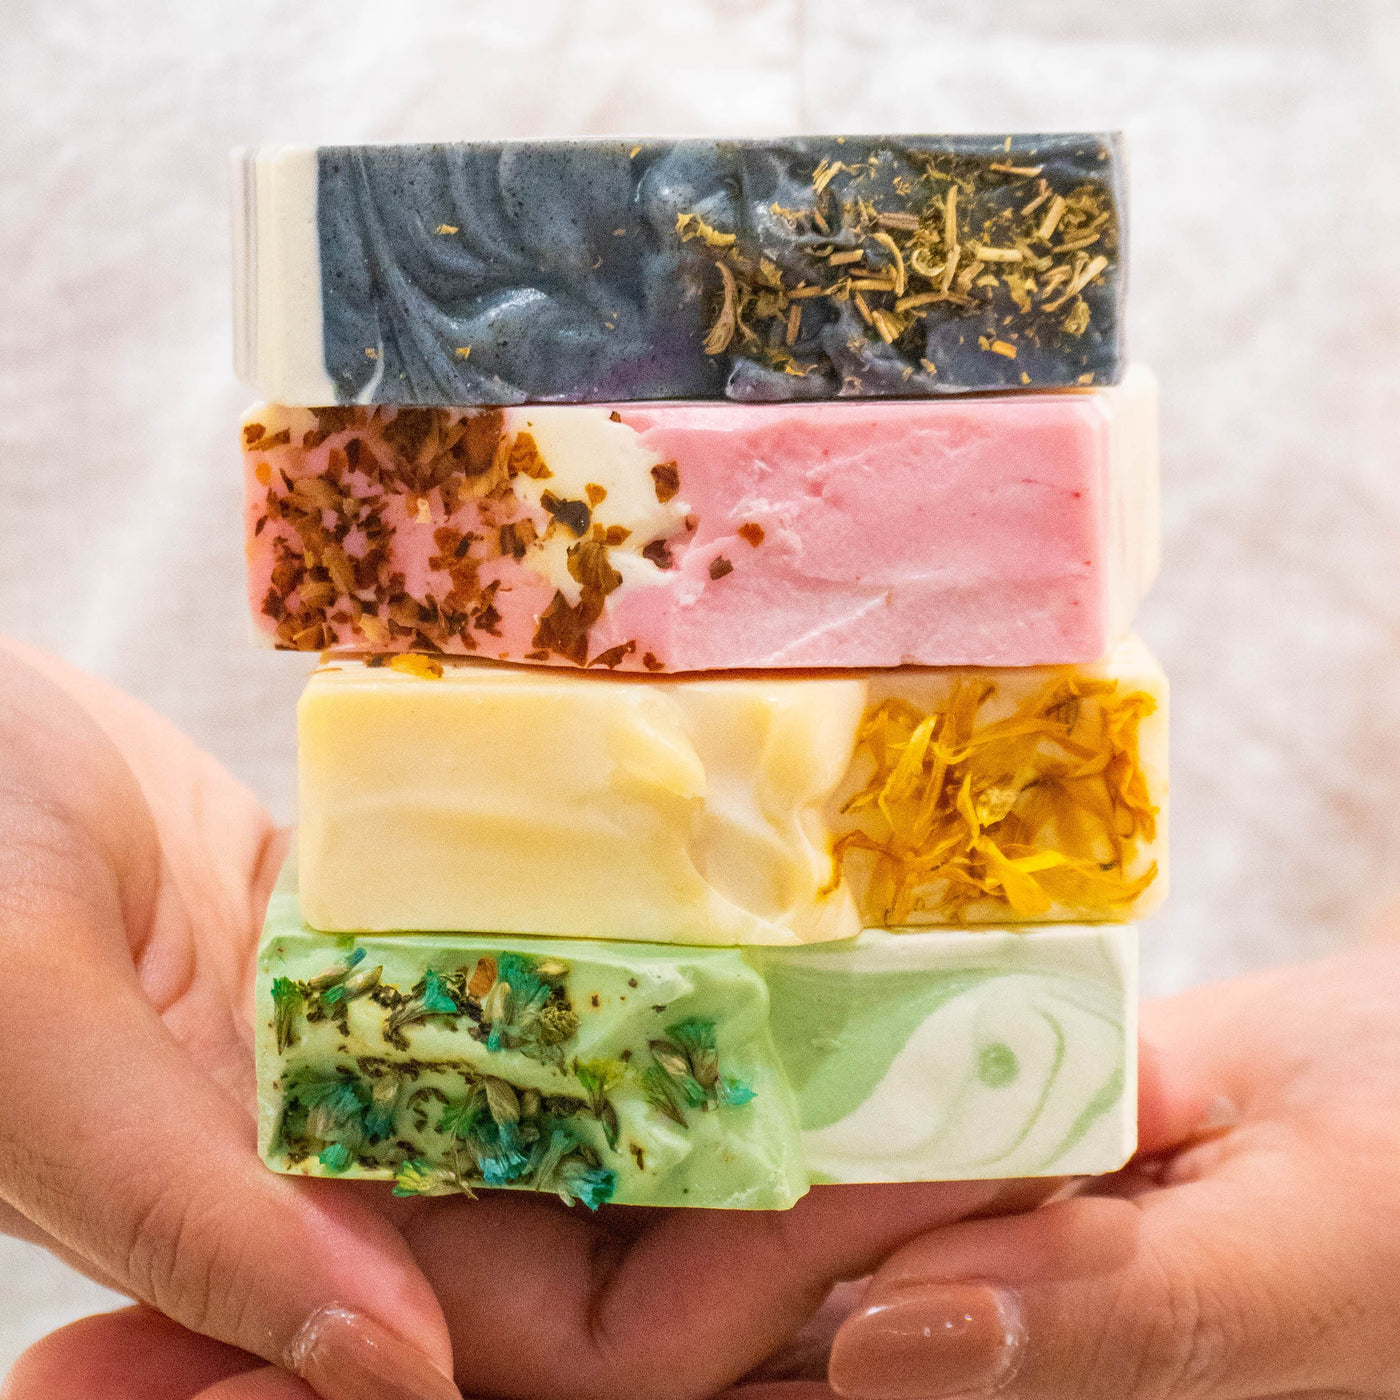 Natural Artisan Bar Soap (Bulk)